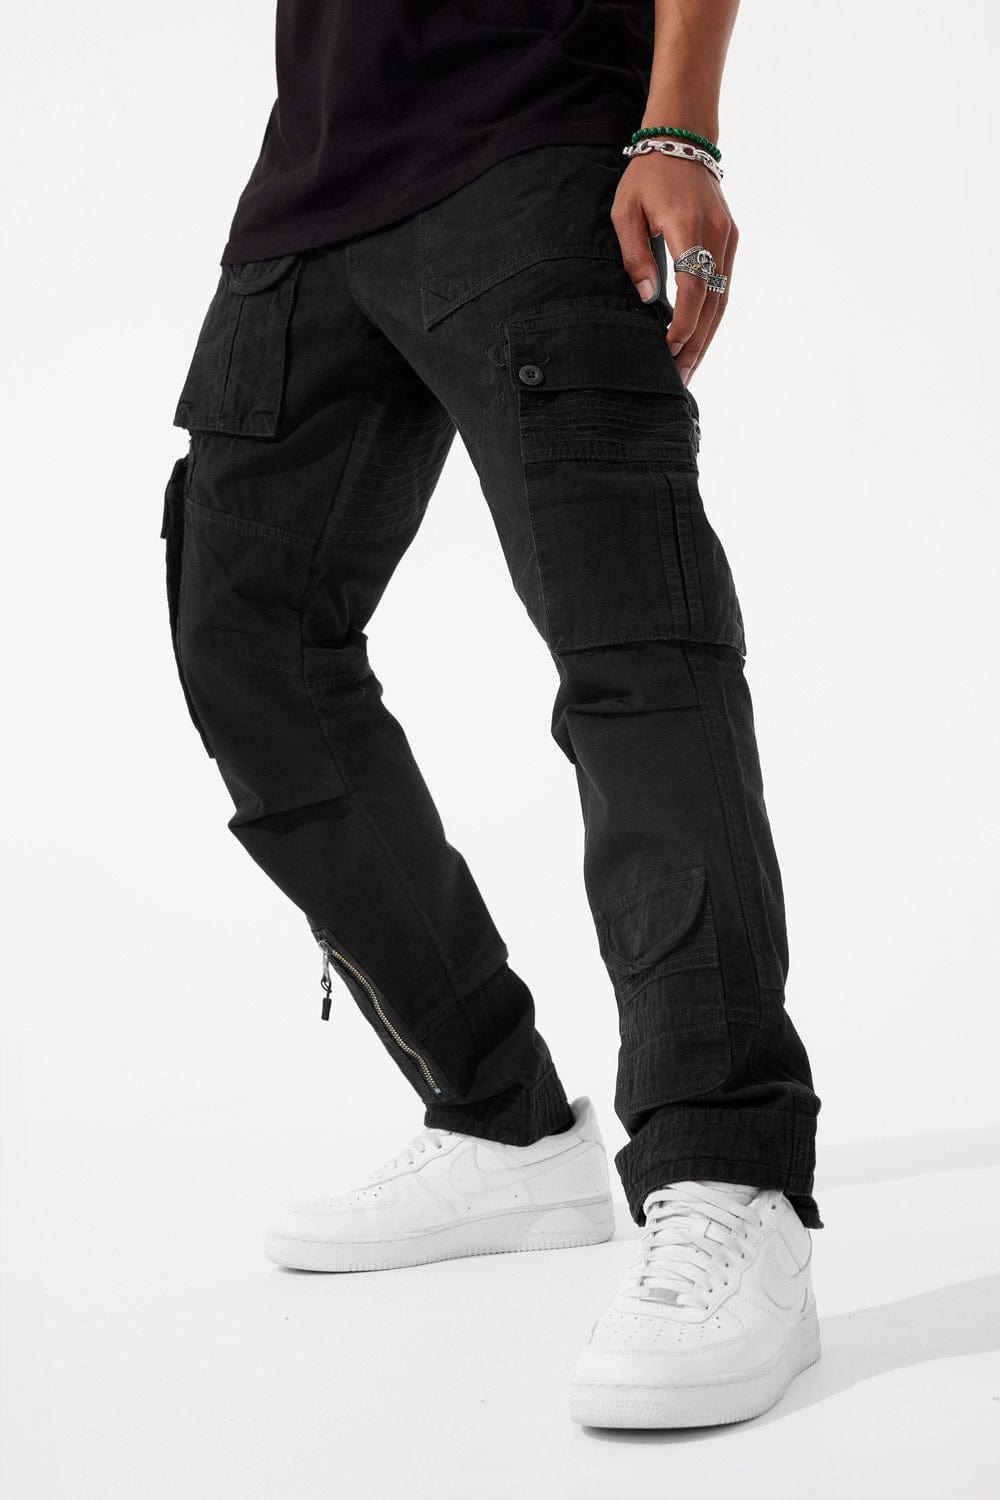 Jordan Craig Xavier - Divinity Cargo Pants (Black) 30/30 / Black